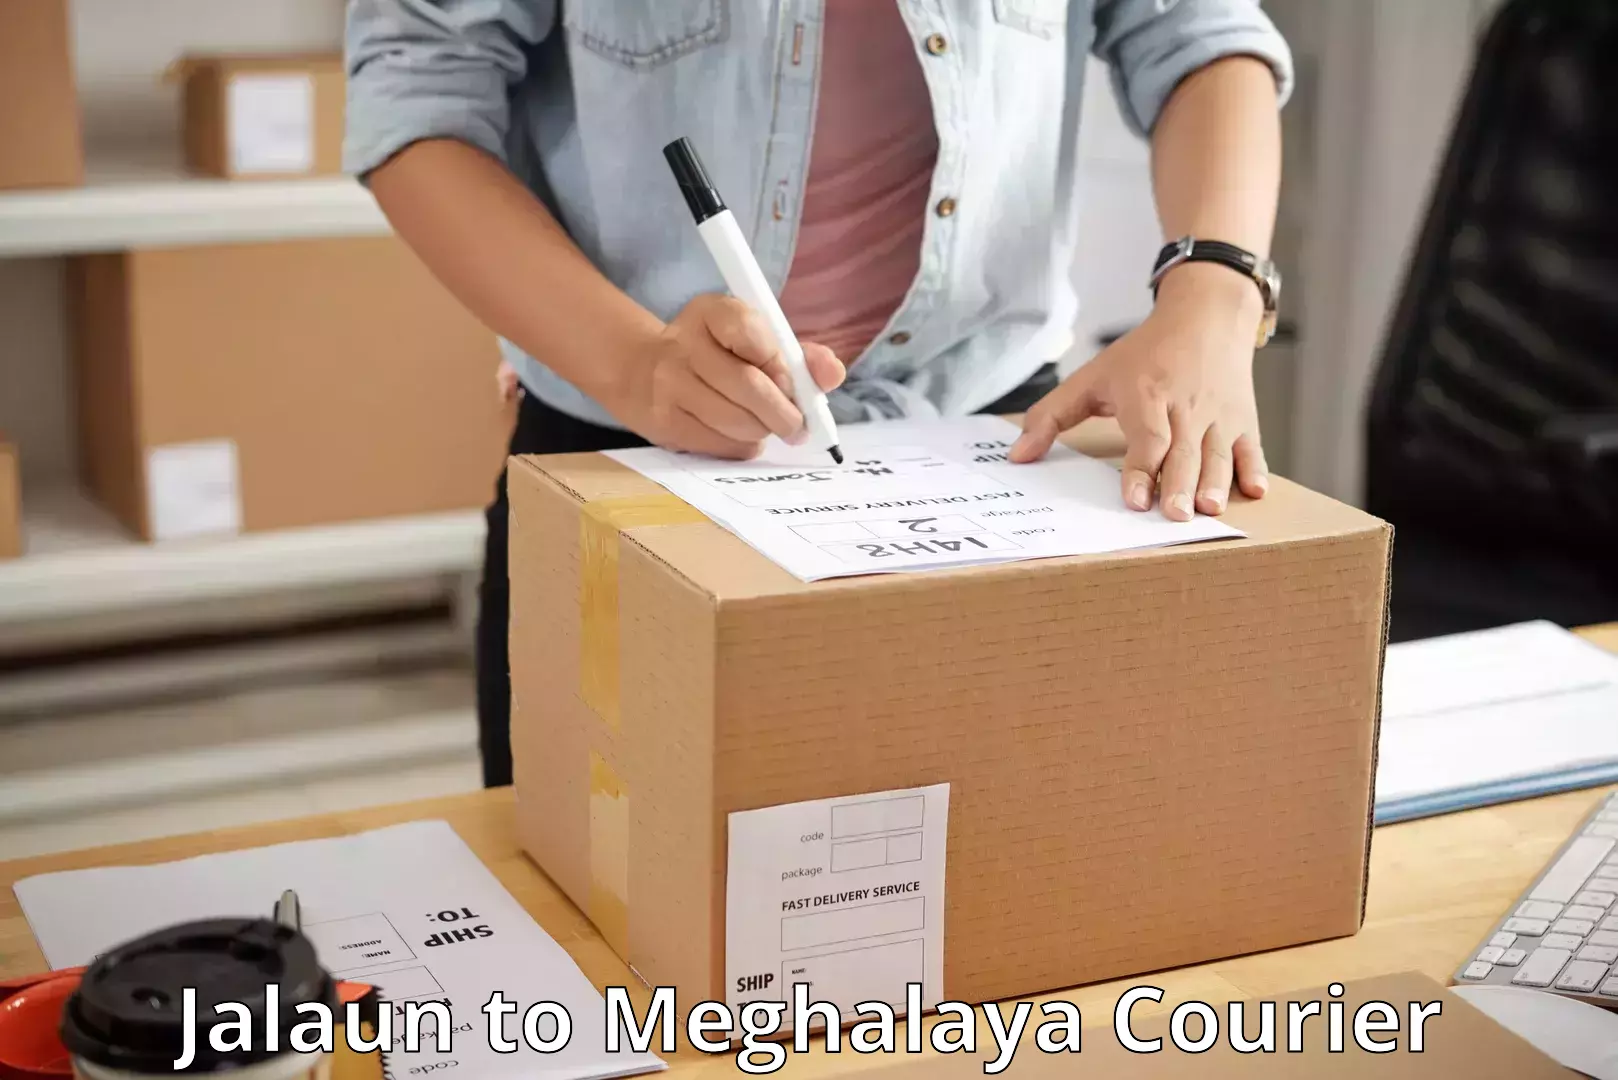 Affordable parcel service Jalaun to Meghalaya